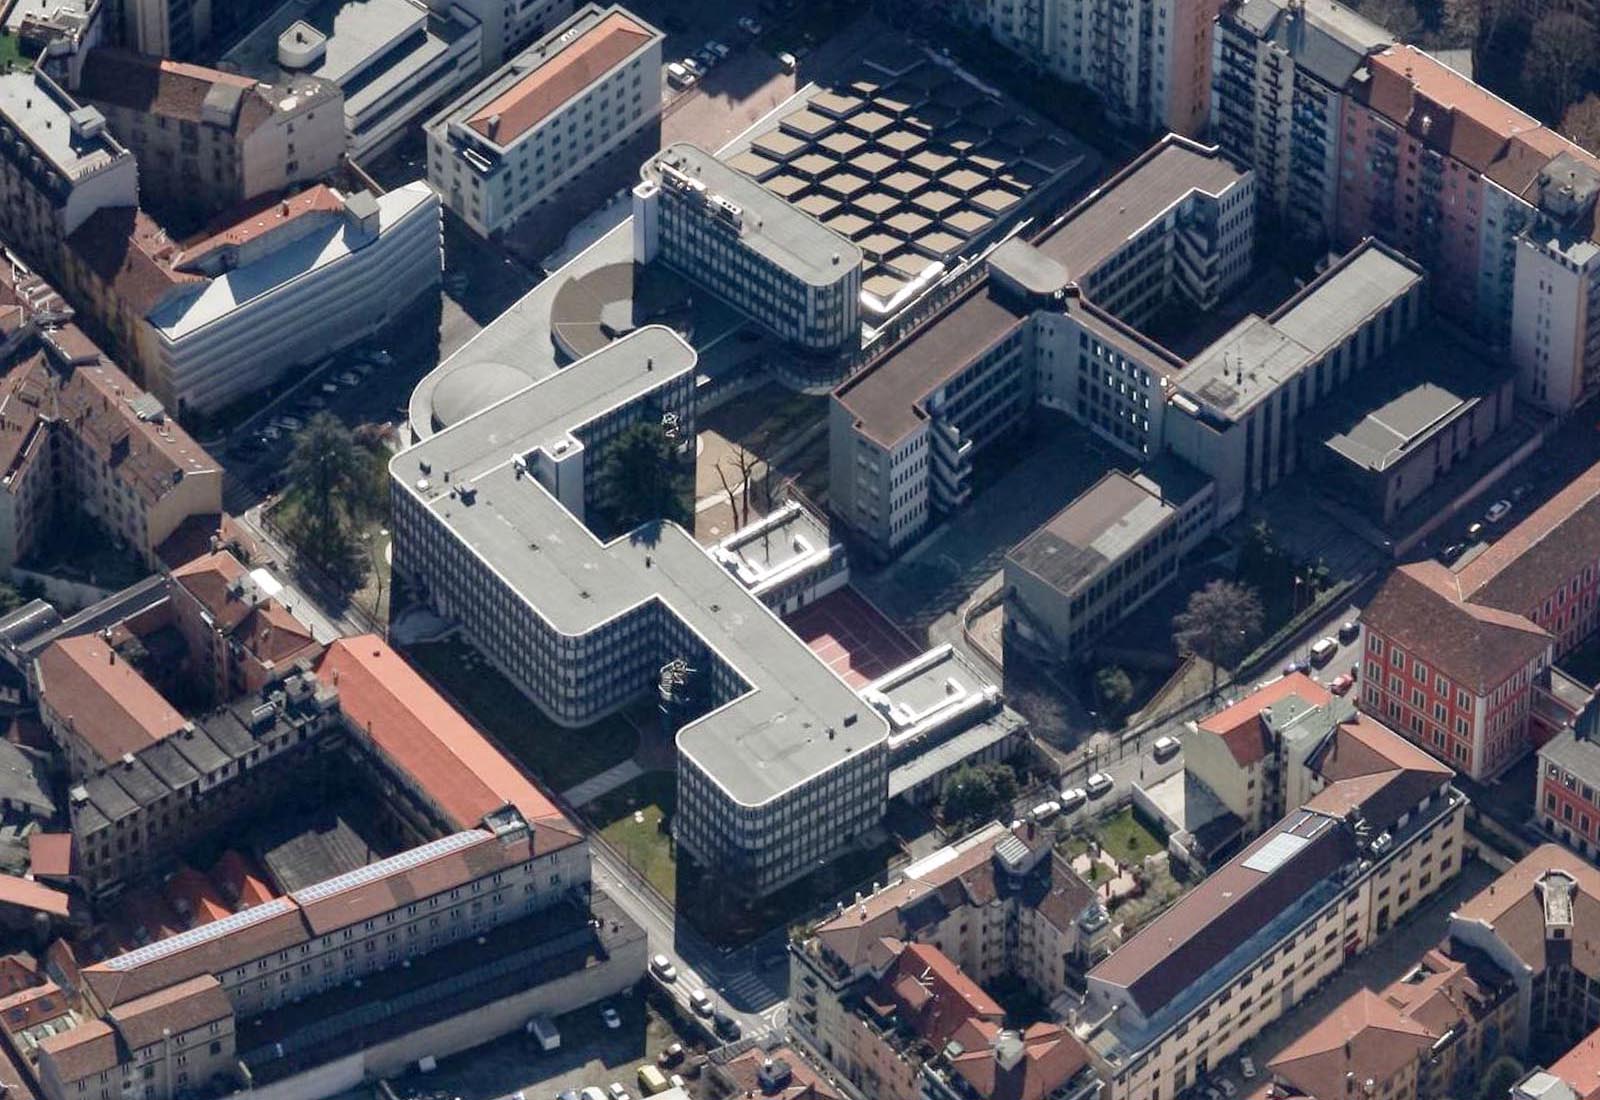 Manzoni school center in Milan - Aerial view of the school ensemble